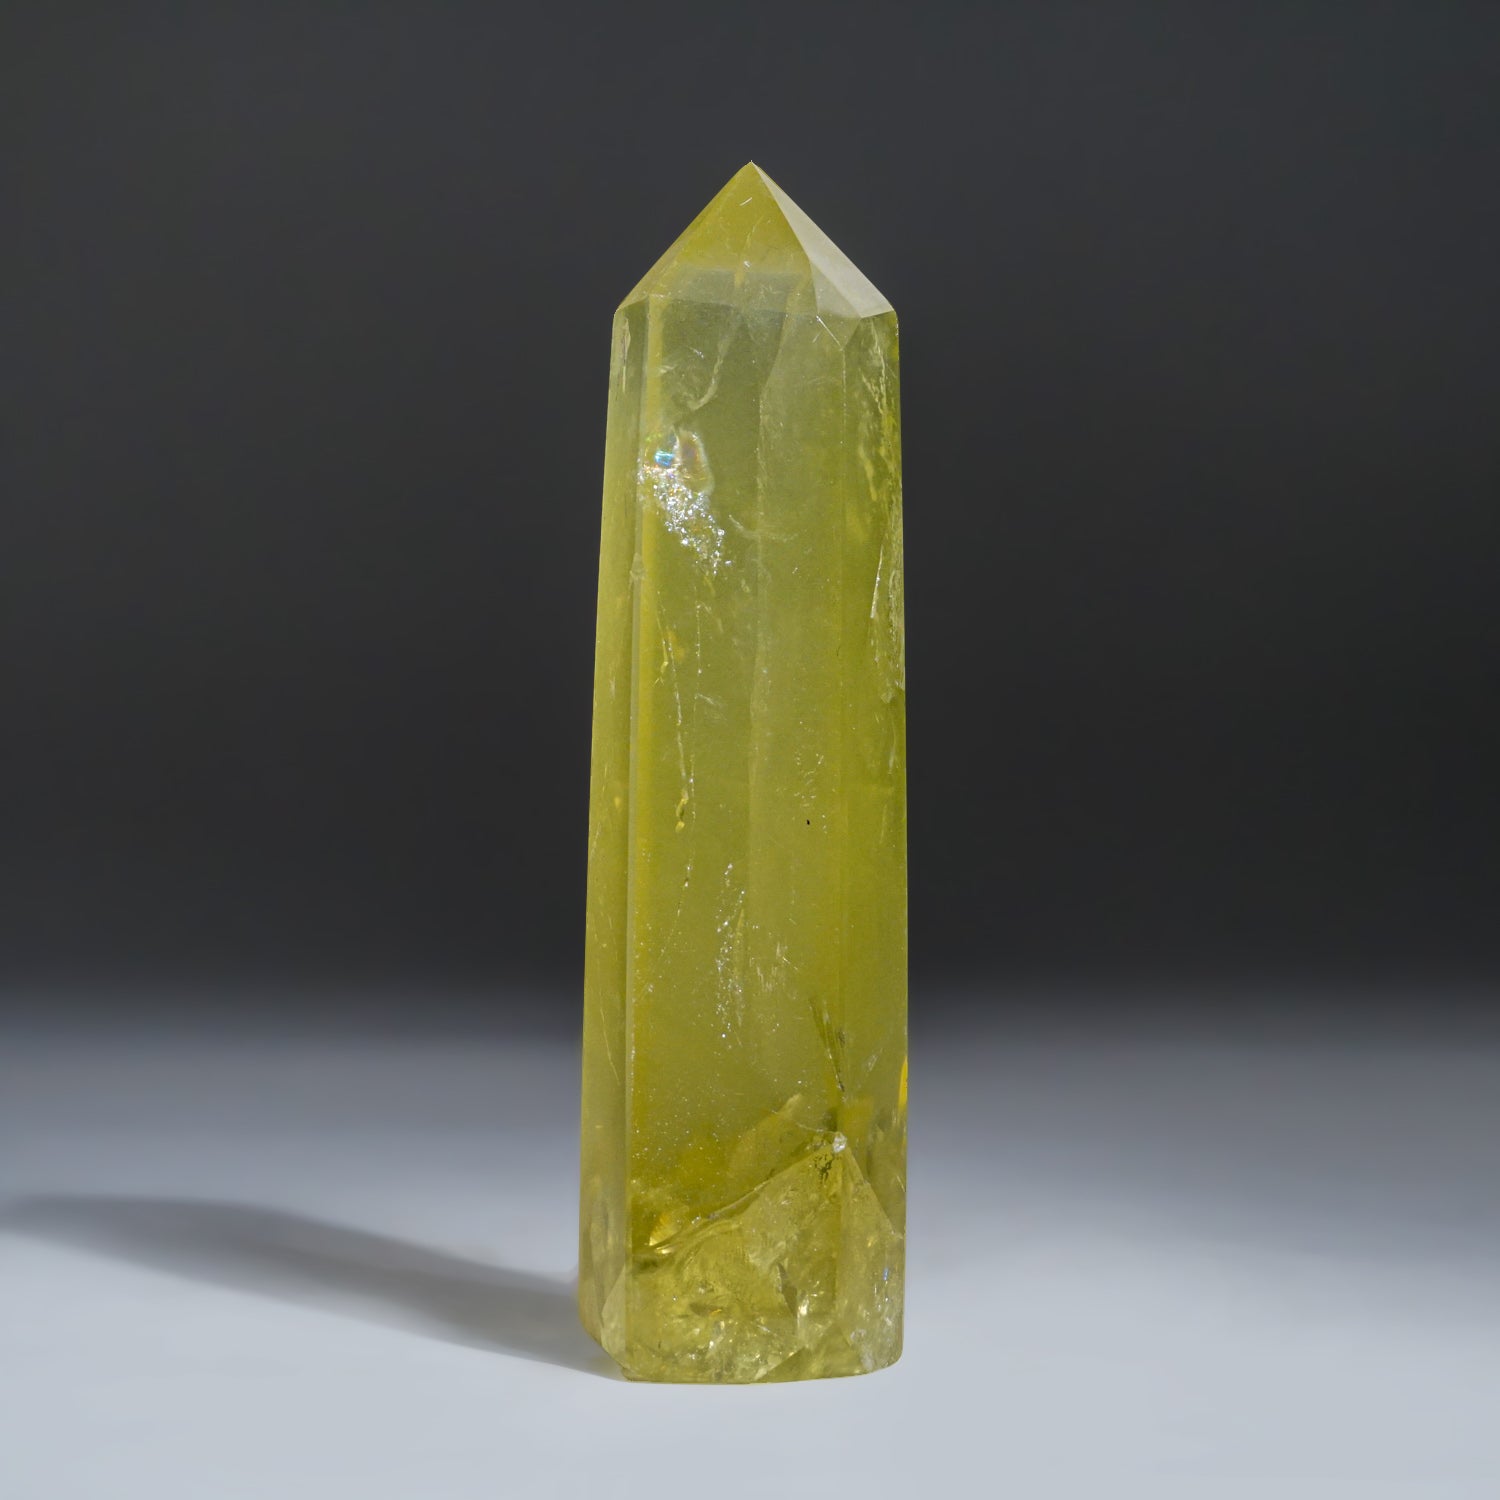 Polished Lemon Quartz Crystal Point from Brazil (289 grams)